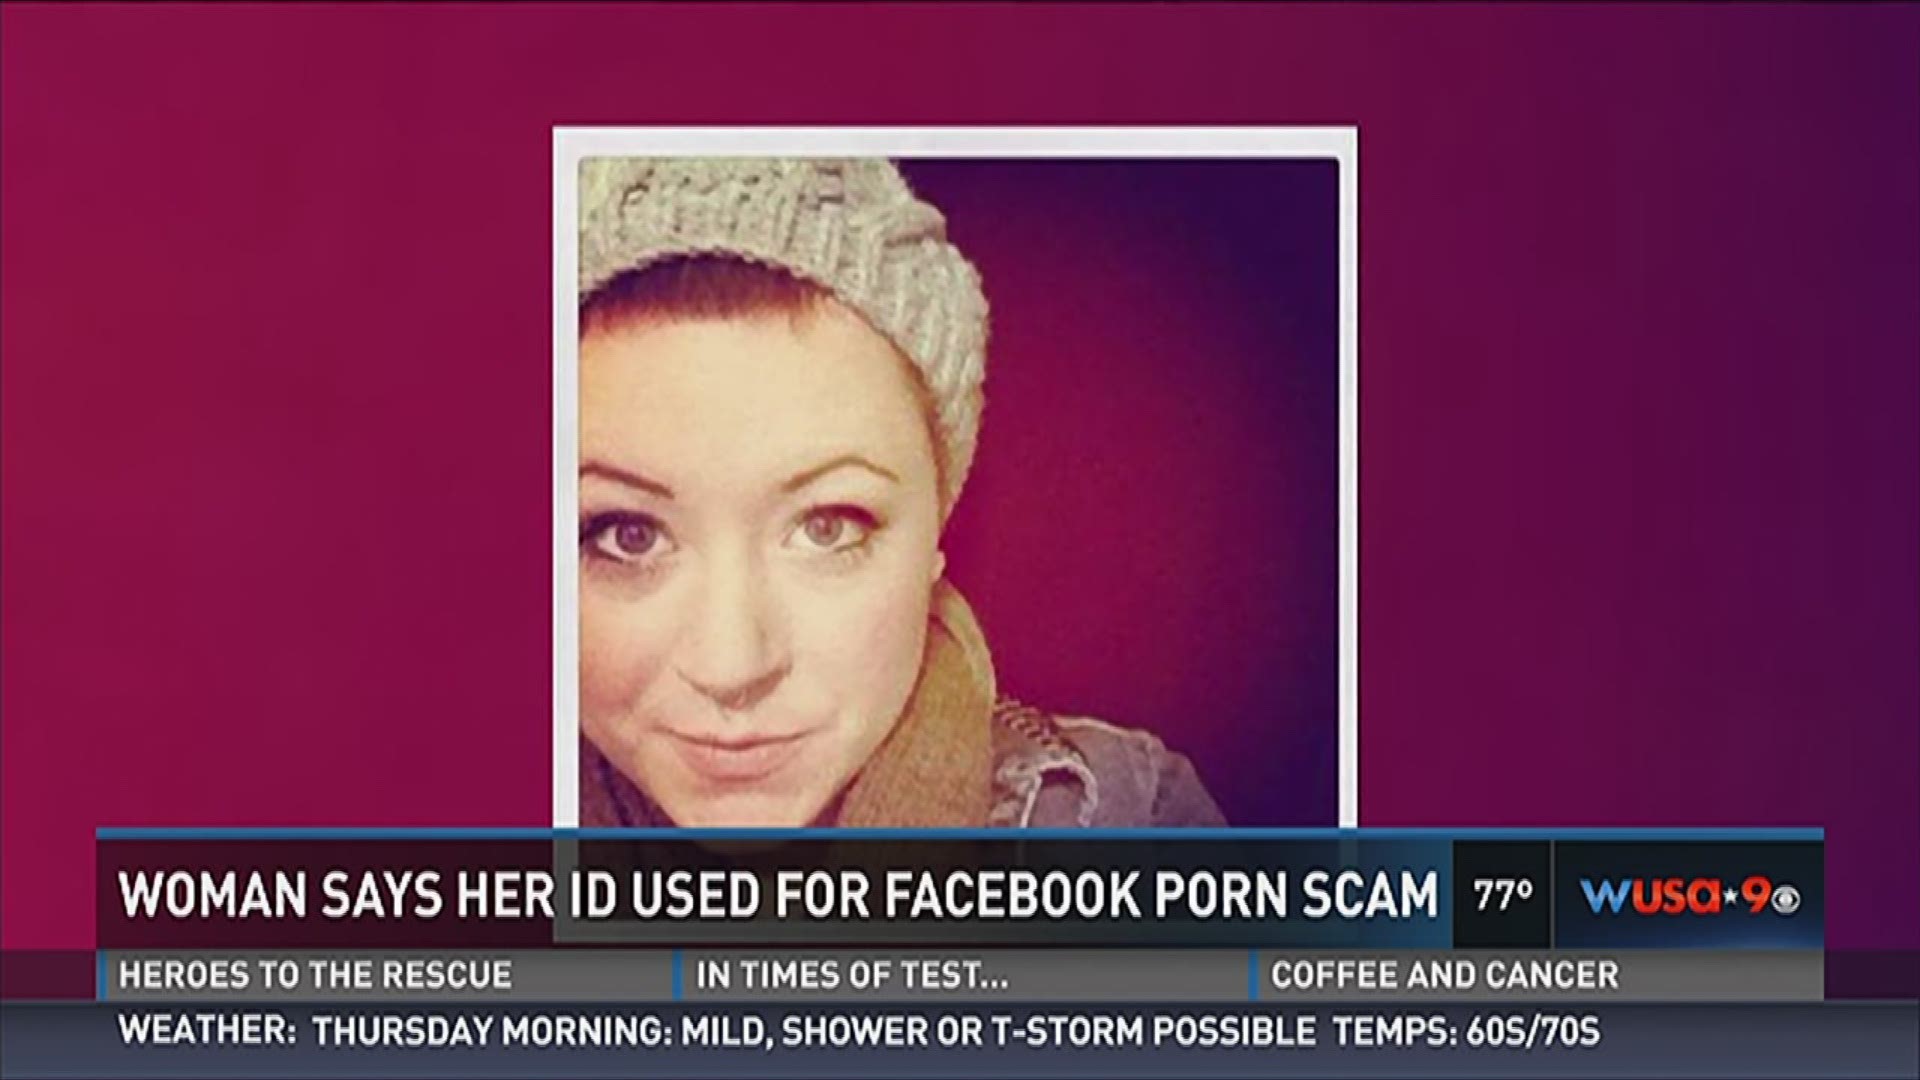 Woman's Identity Stolen in Facebook Sex Scam | wltx.com